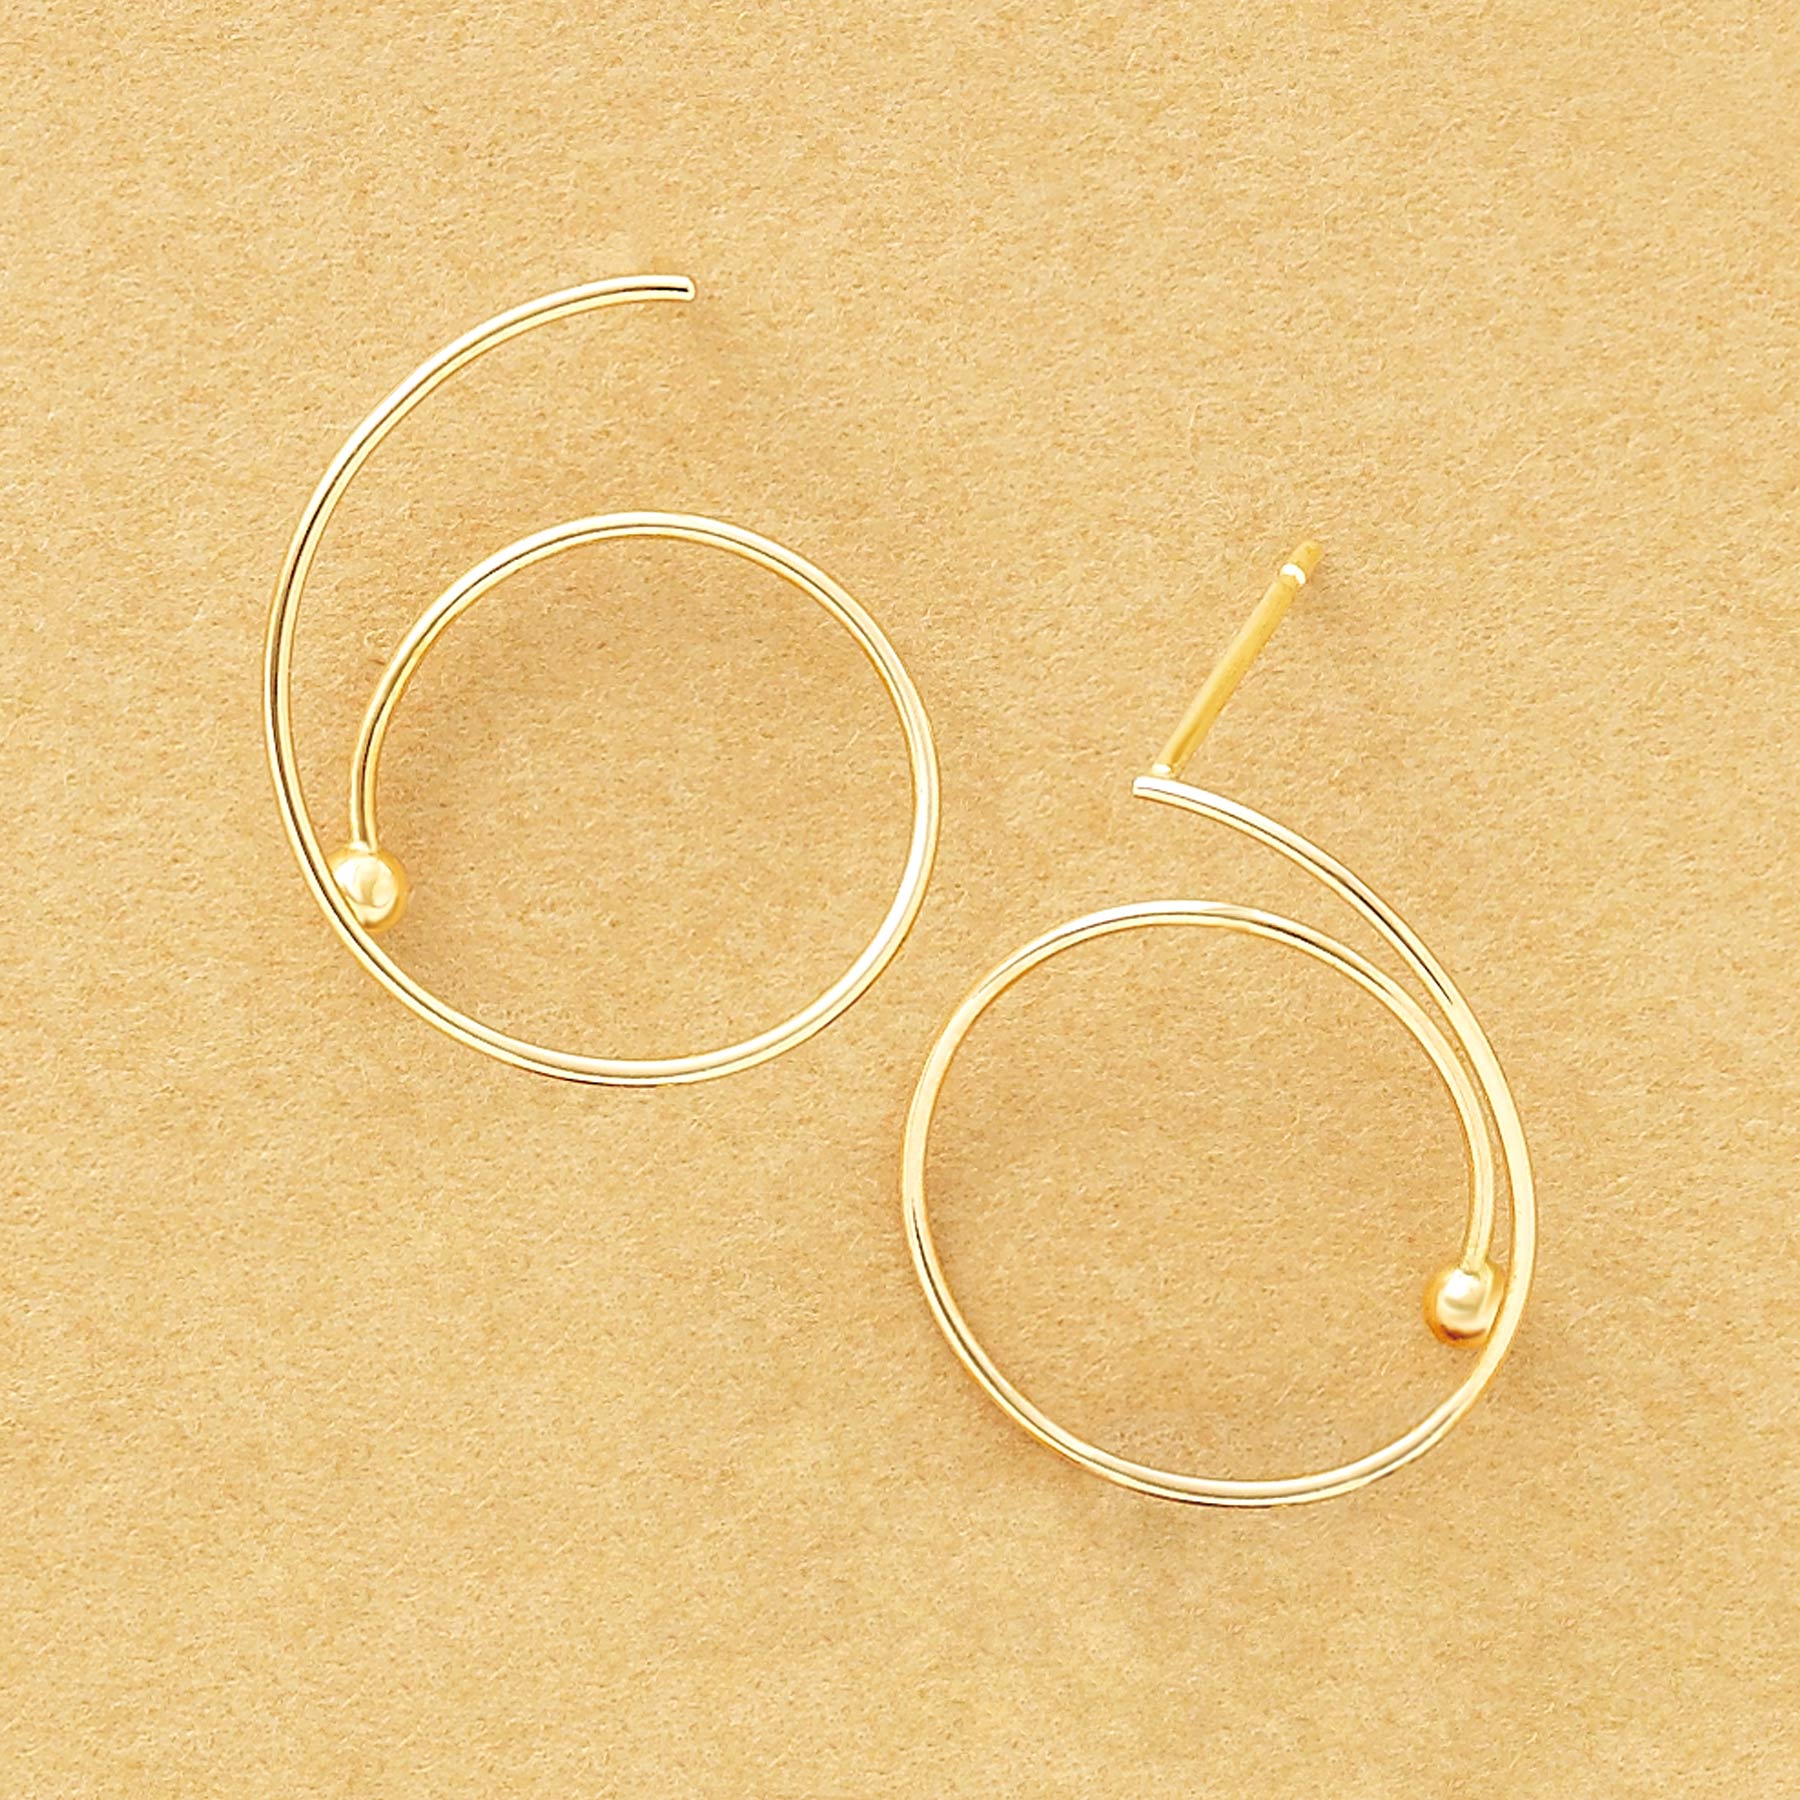 [Palette] 18K / 10K Yellow Gold Hoop Stud Earrings - Product Image